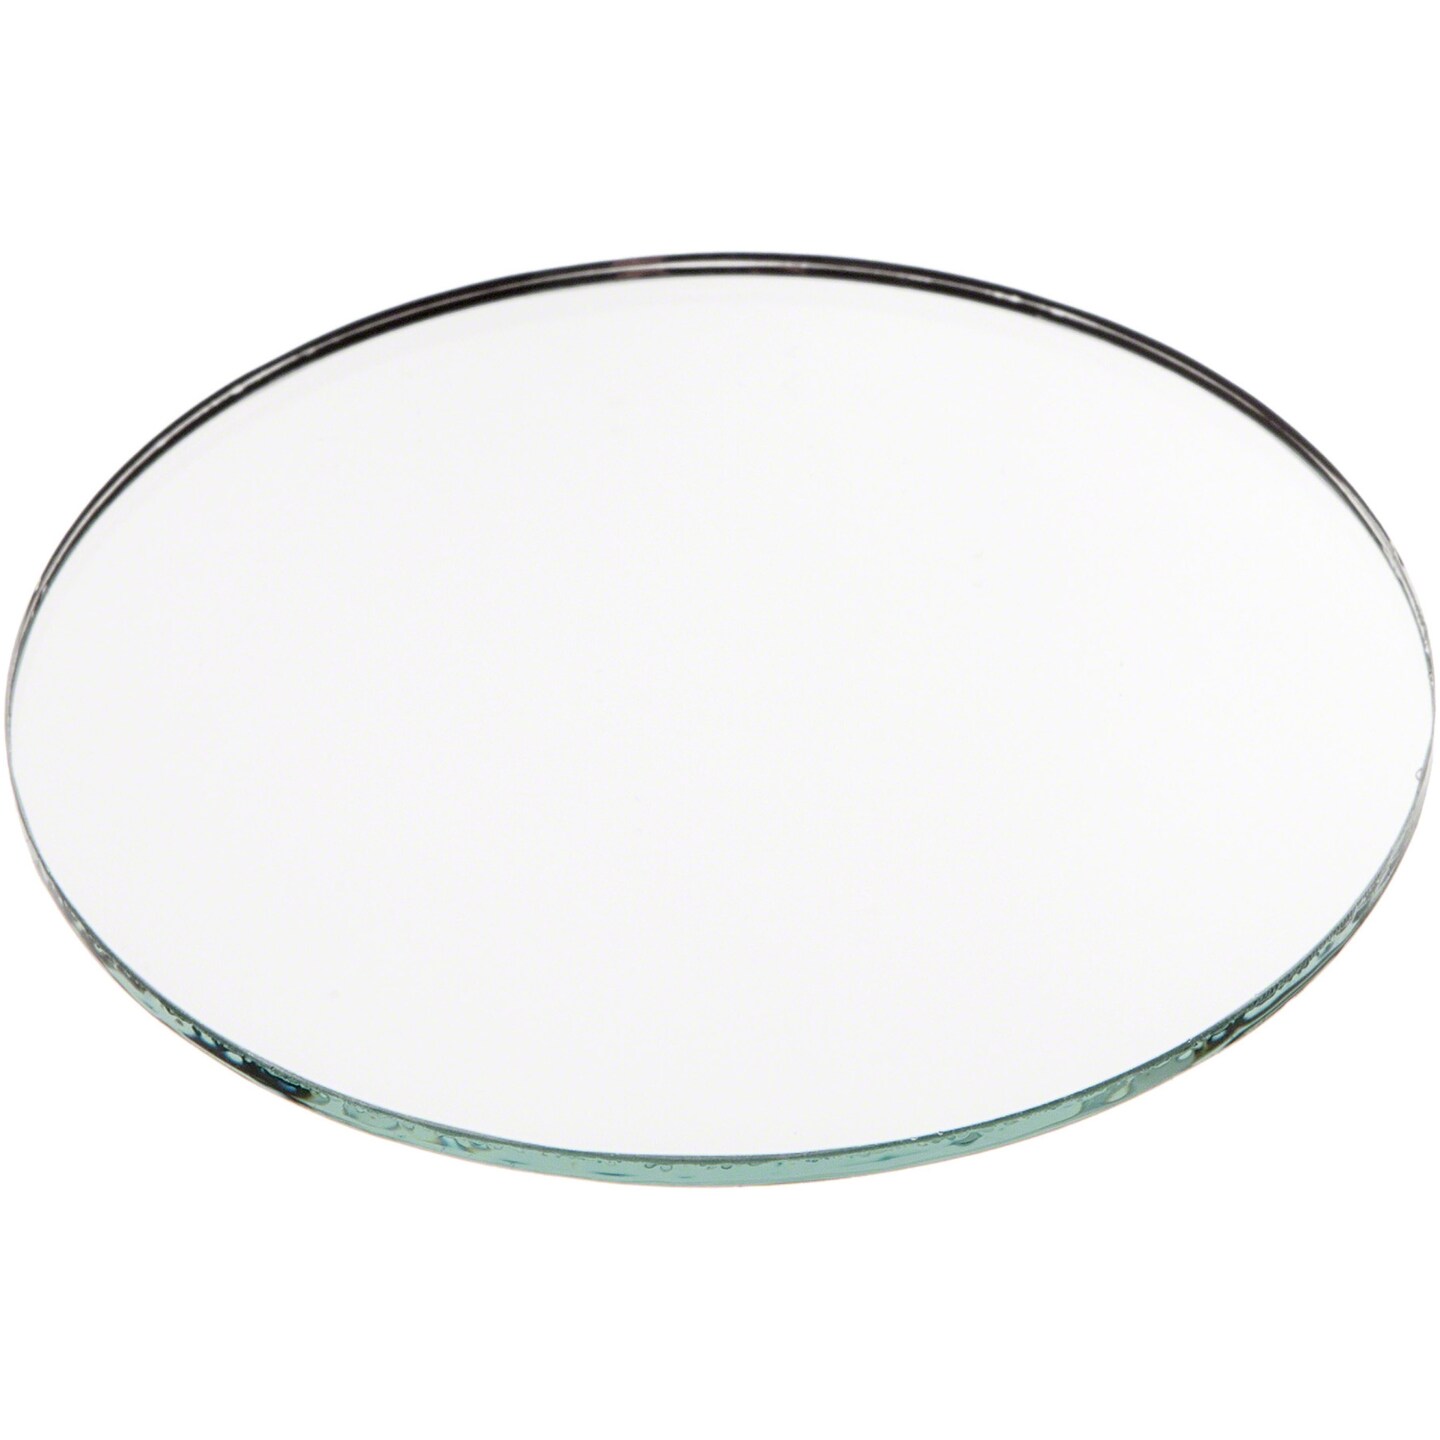 Plymor Round 3mm Non-Beveled Glass Mirror, 4 inch x 4 inch